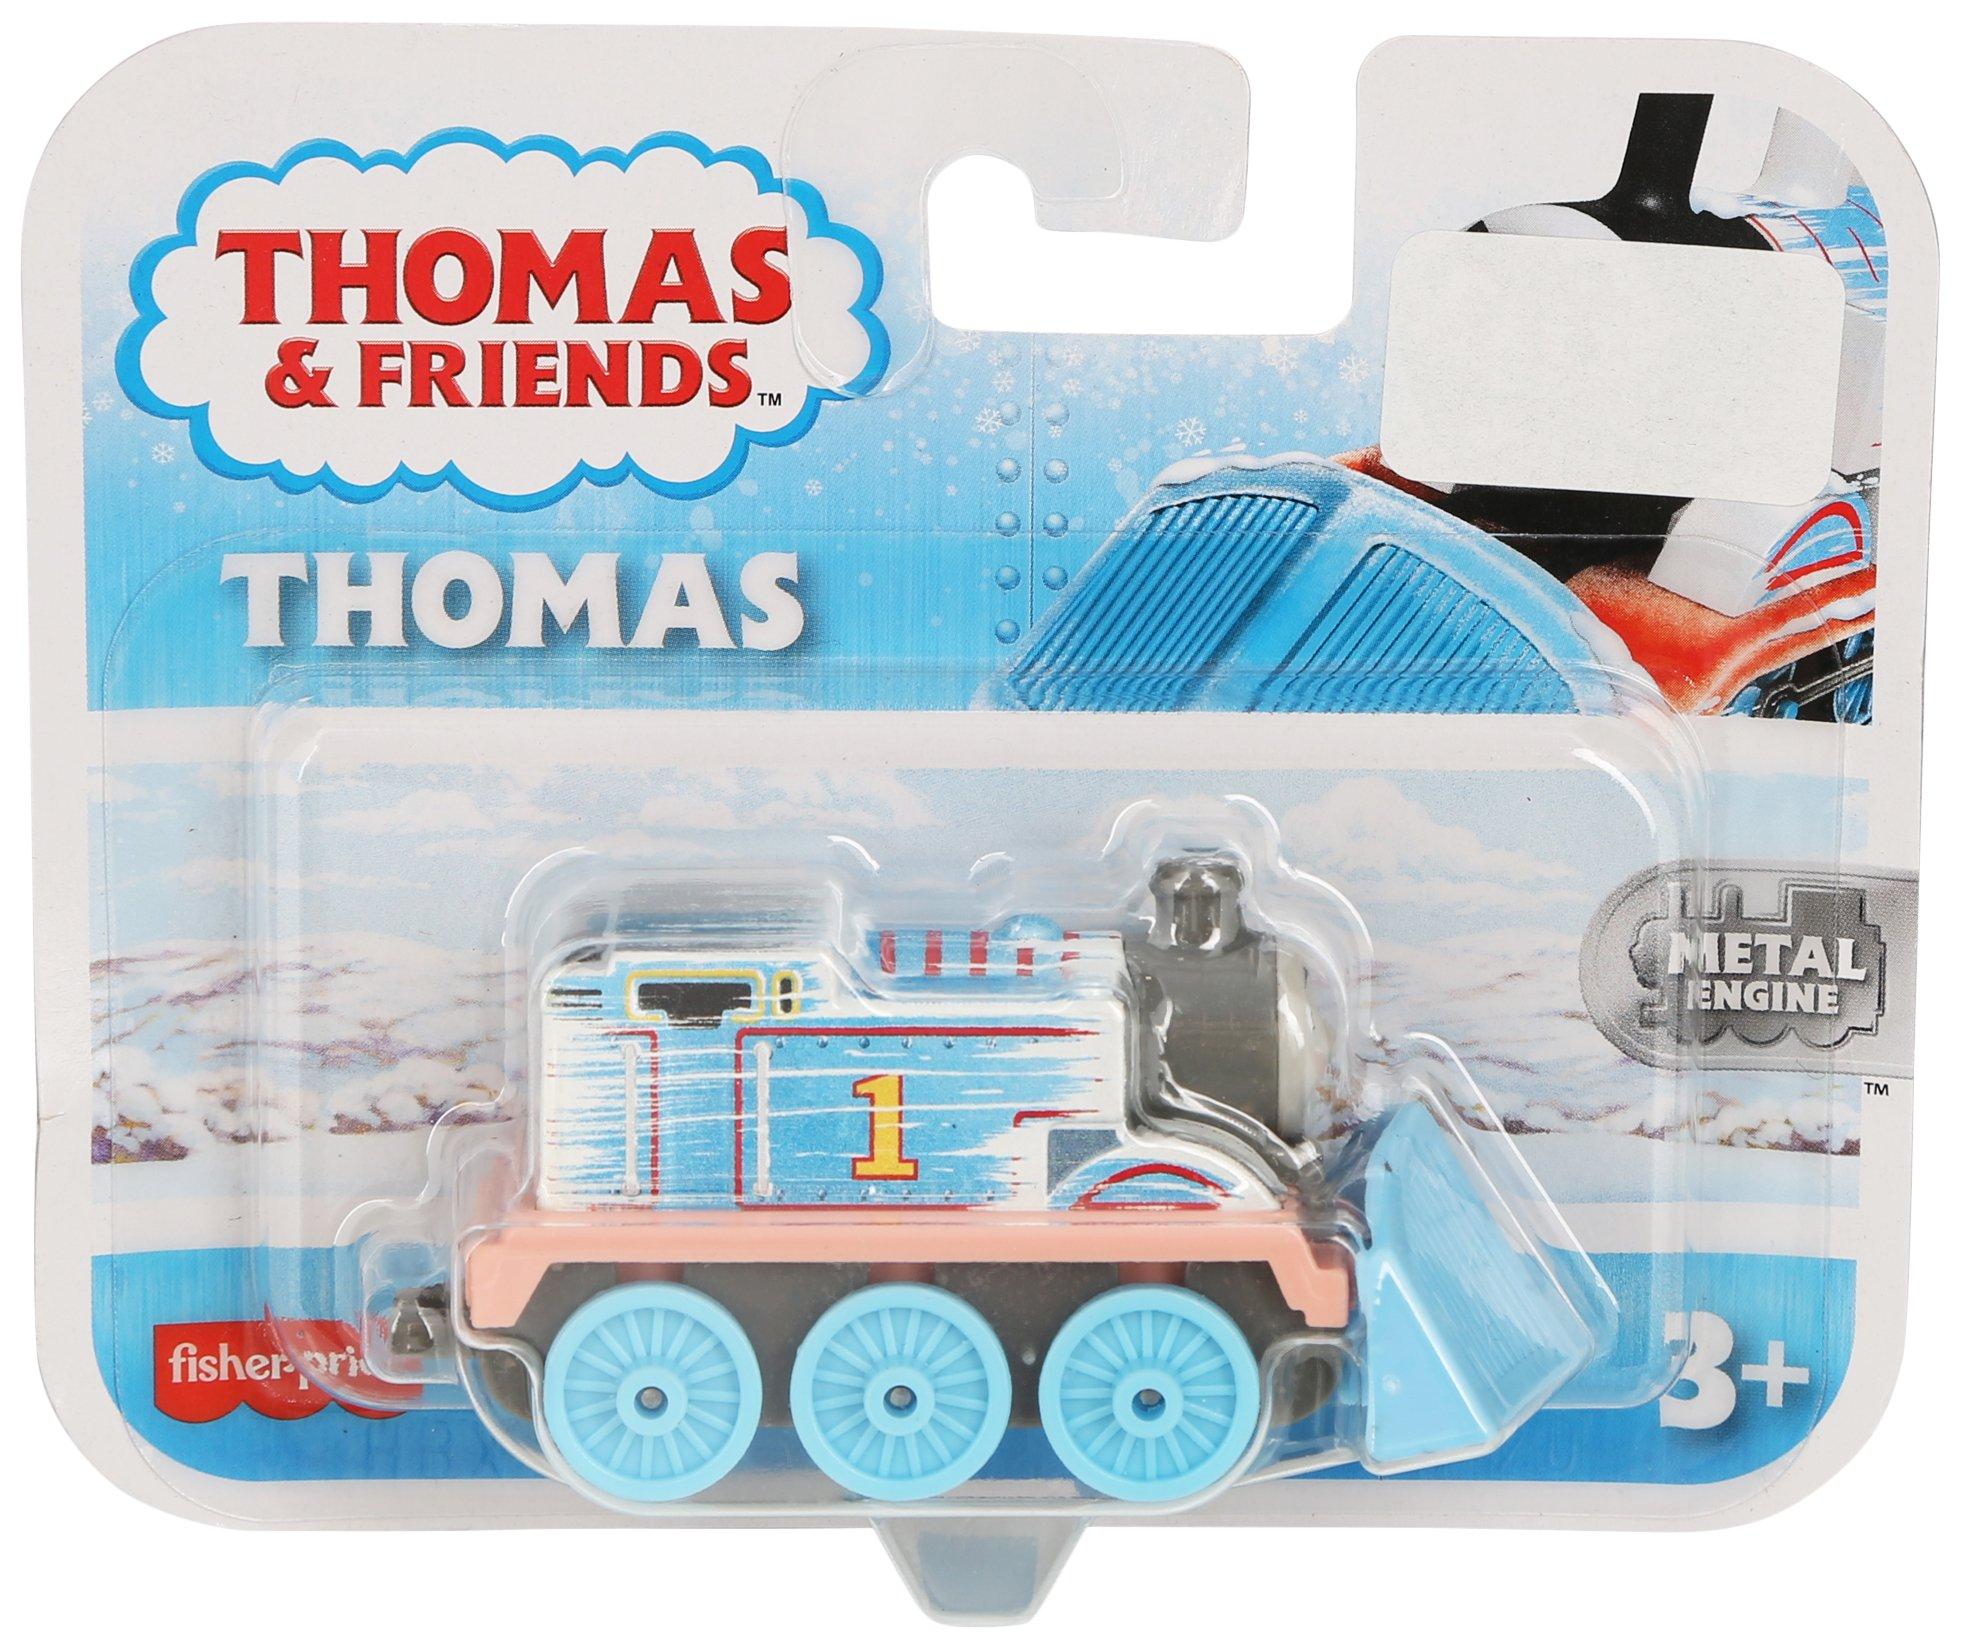 Thomas & Friends Thomas Toy Engine